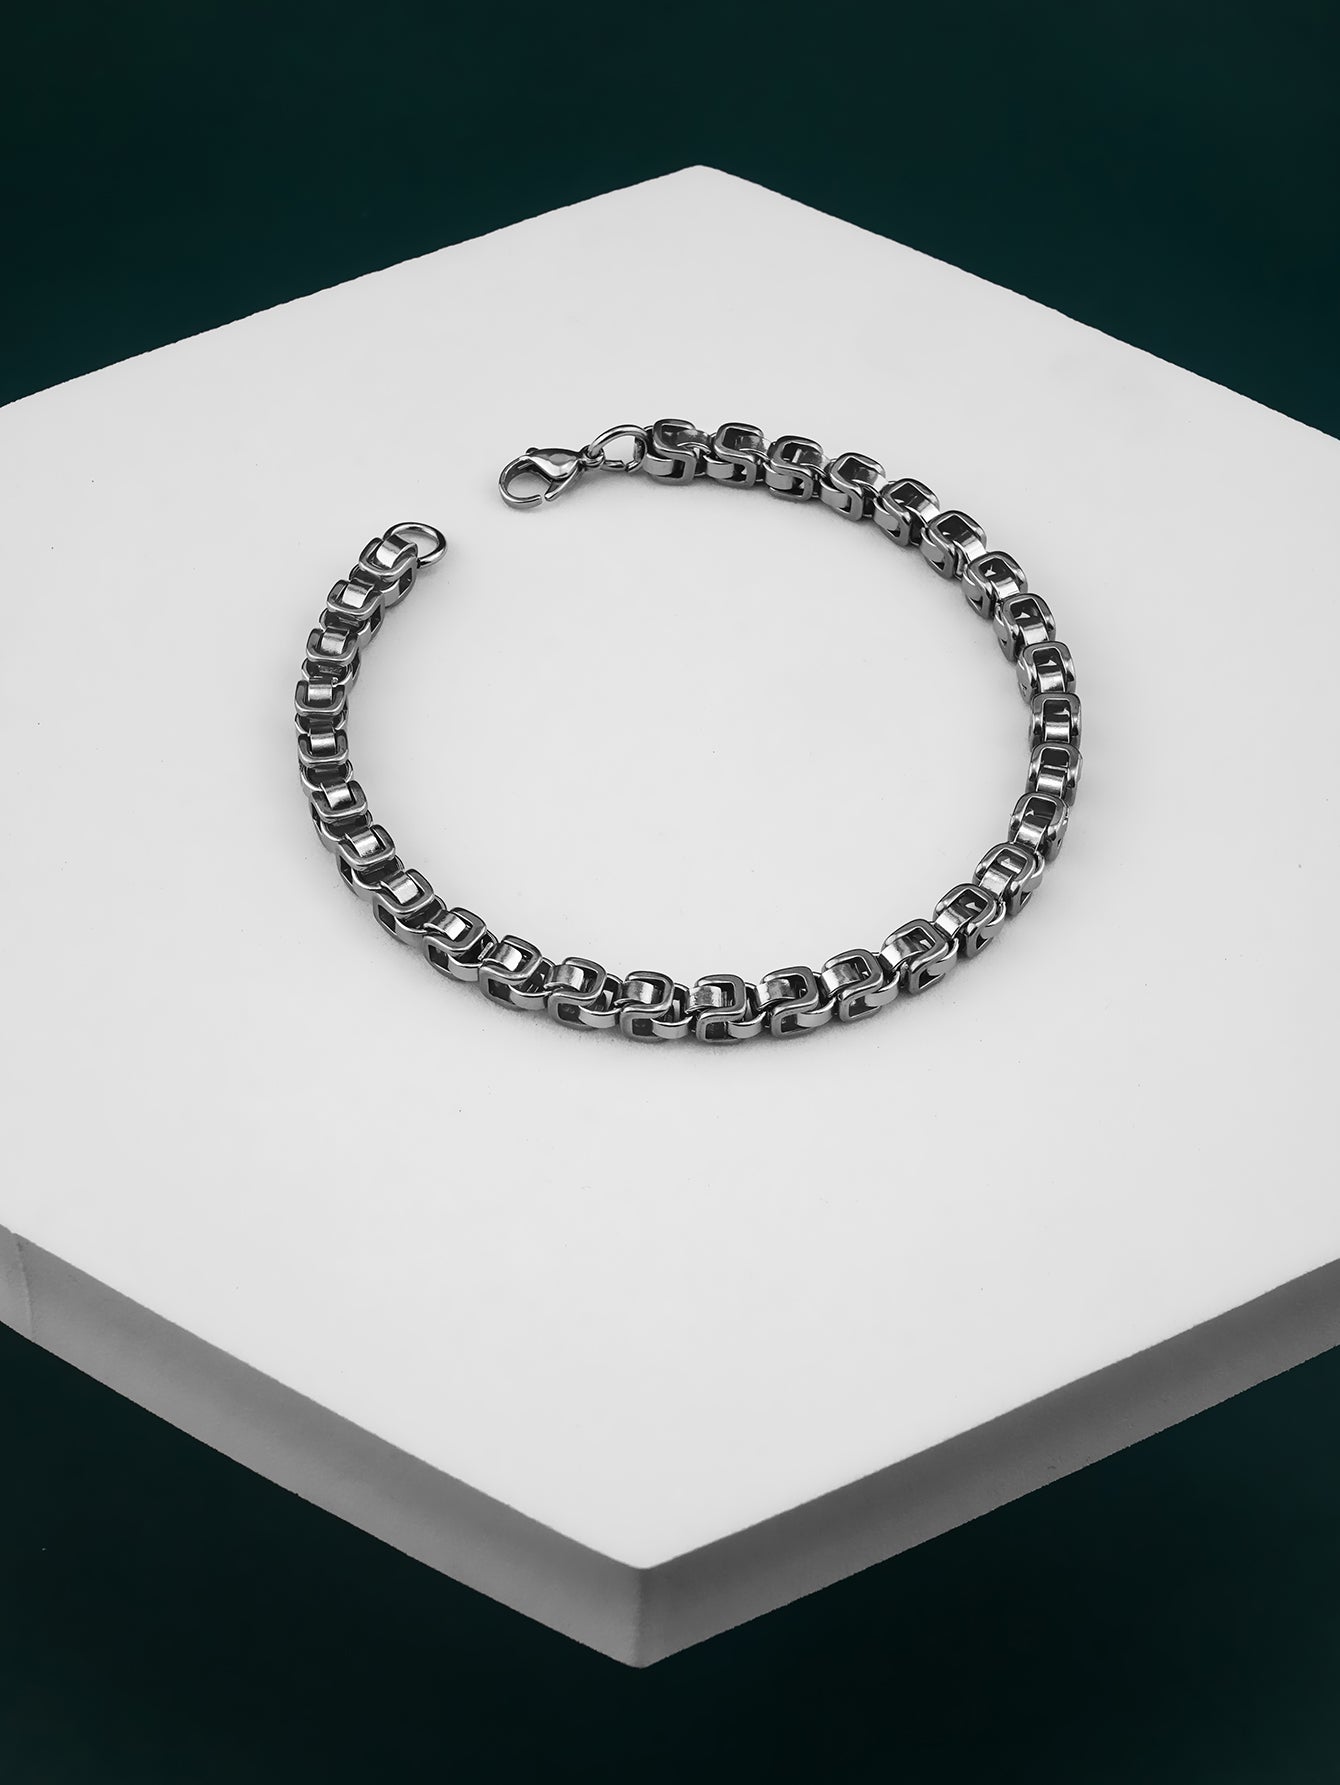 Small Size Chains Bracelets